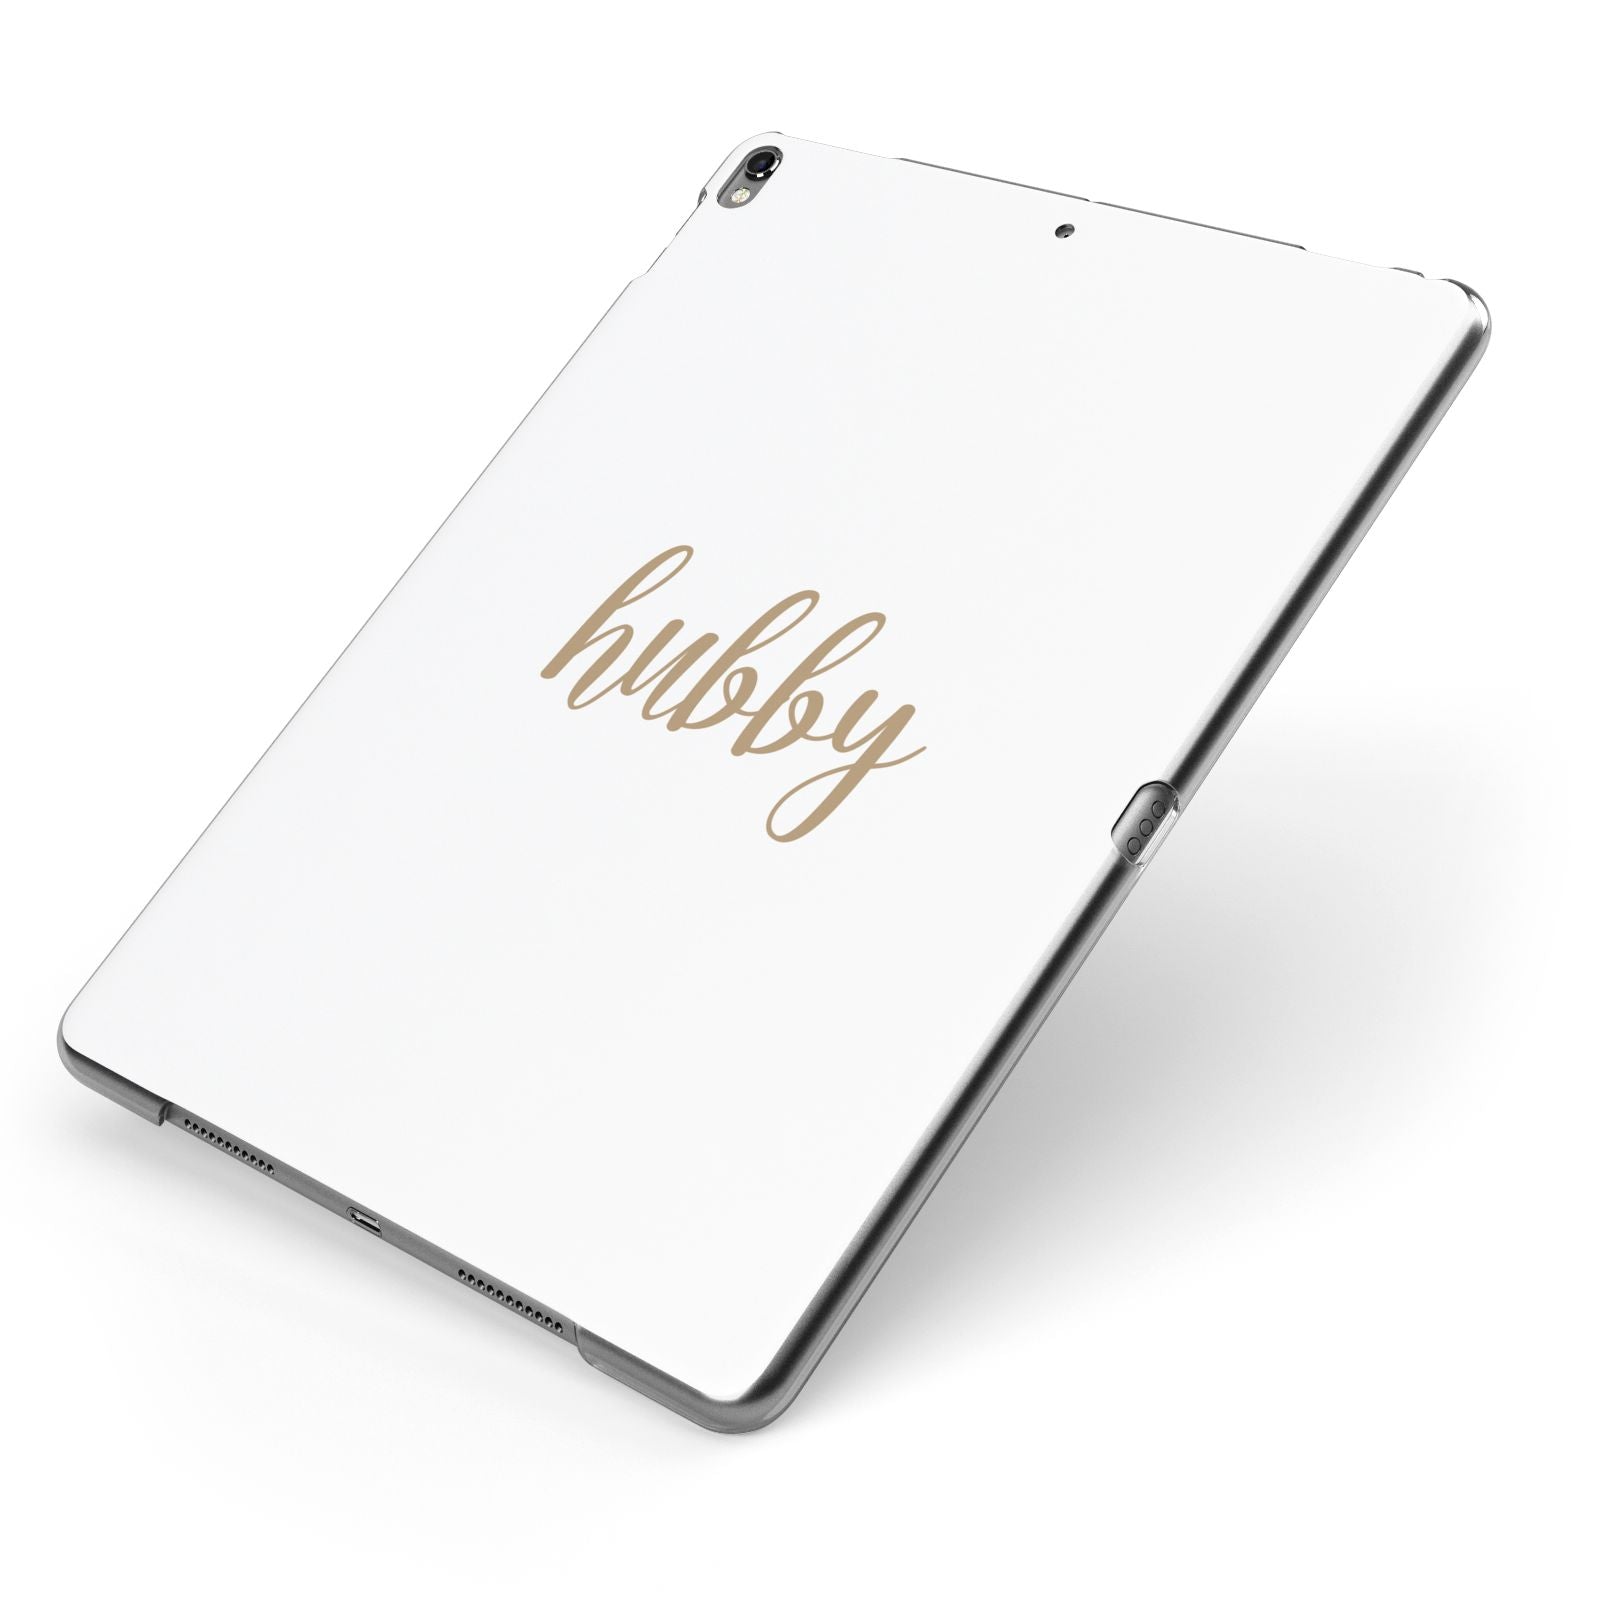 Hubby Apple iPad Case on Grey iPad Side View